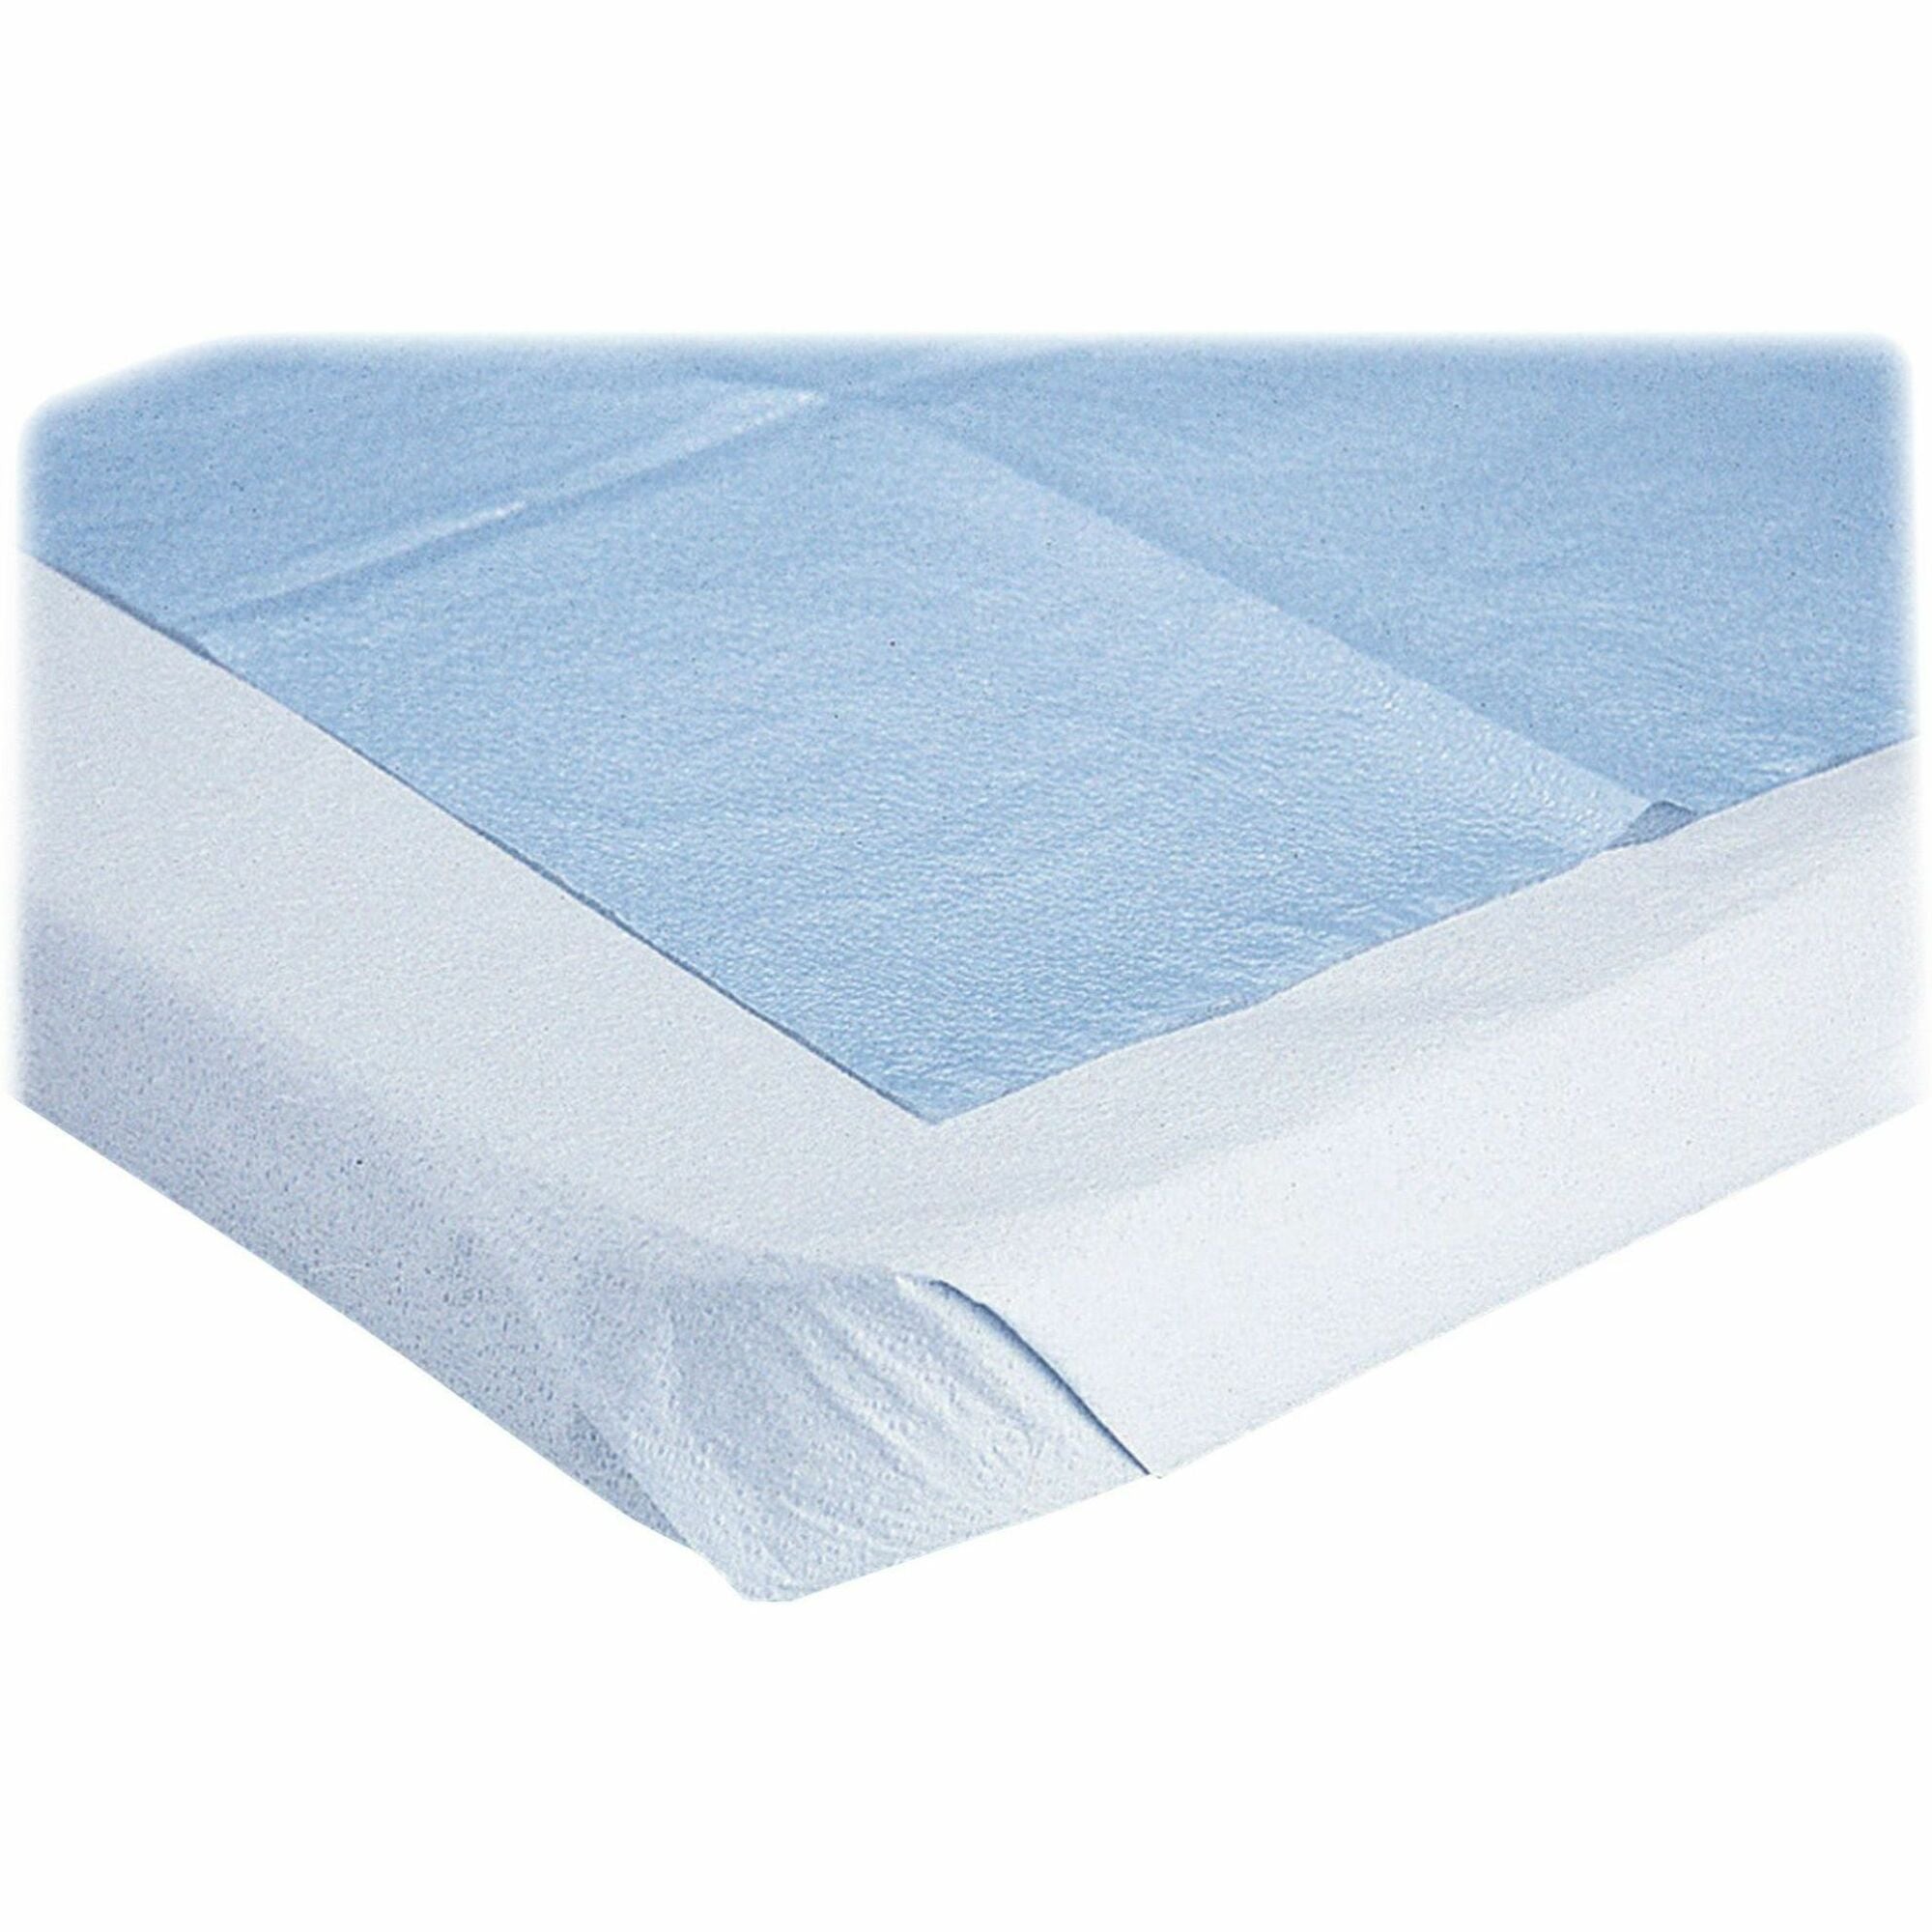 Medline Blue Disposable Stretcher Sheets - Tissue - For Medical - Blue - 50 / Box - 